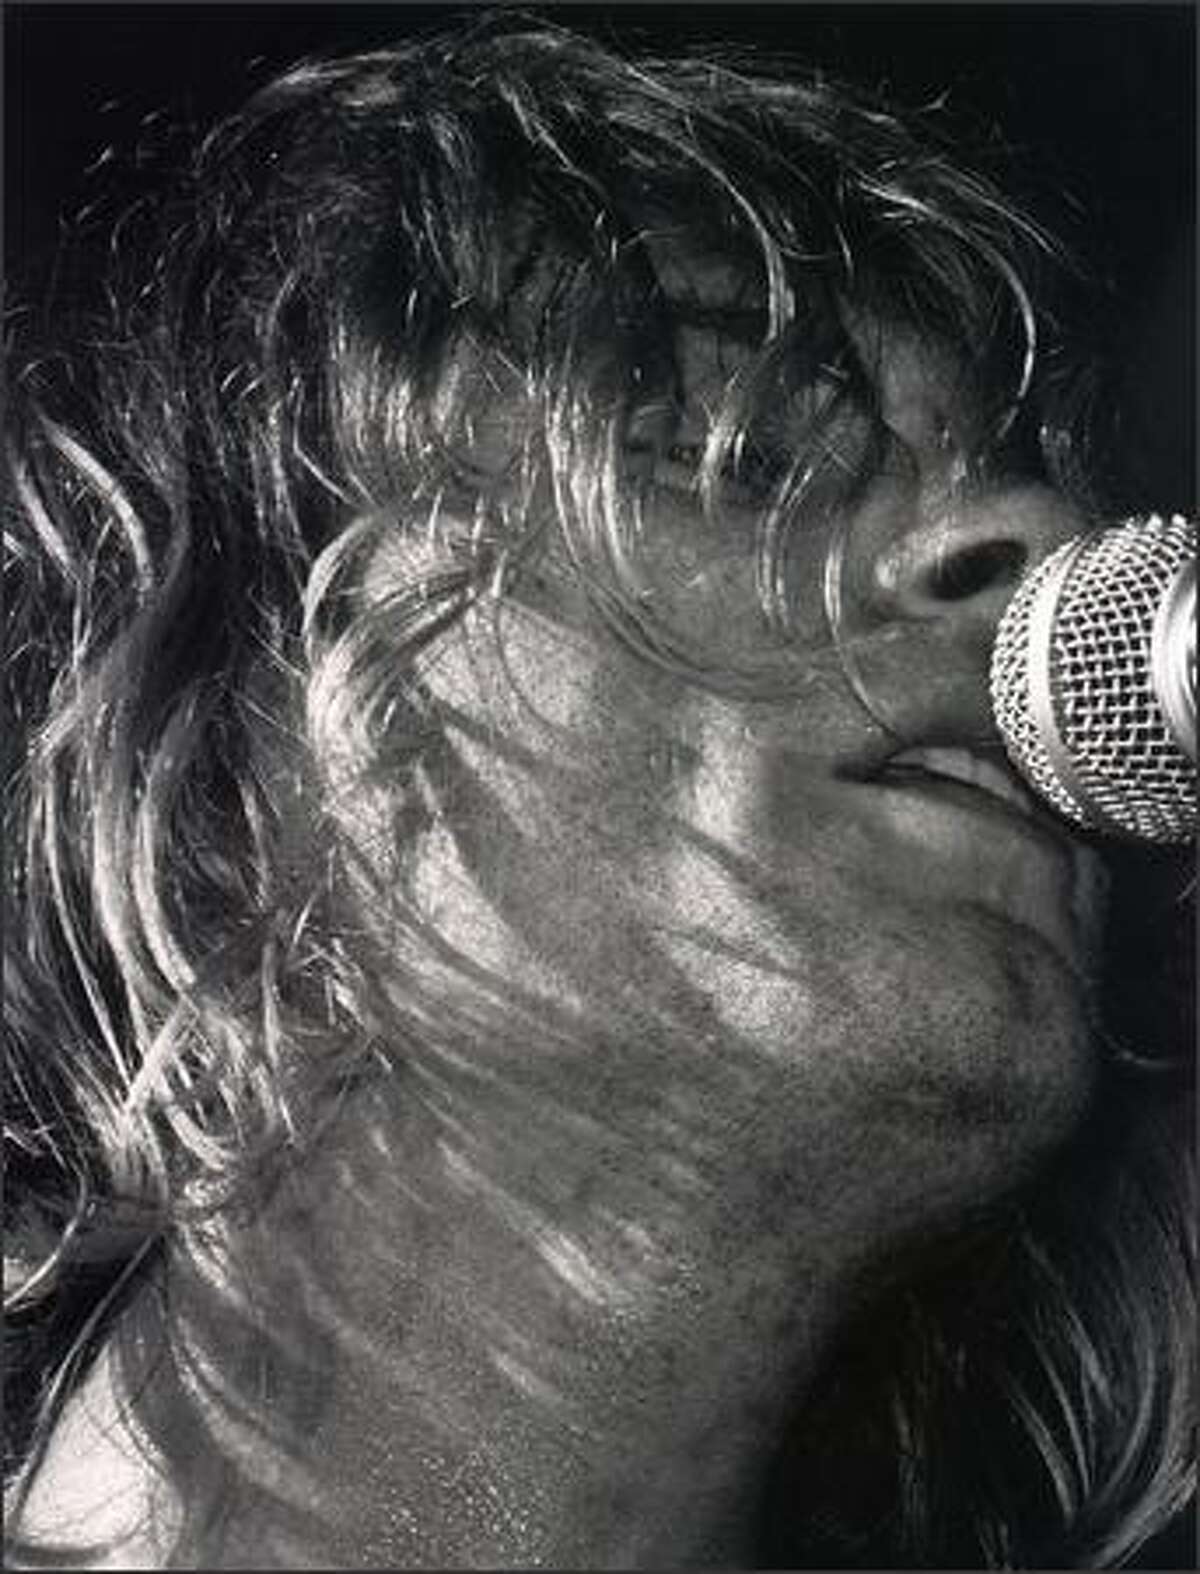 Seattle History: Kurt Cobain of Nirvana